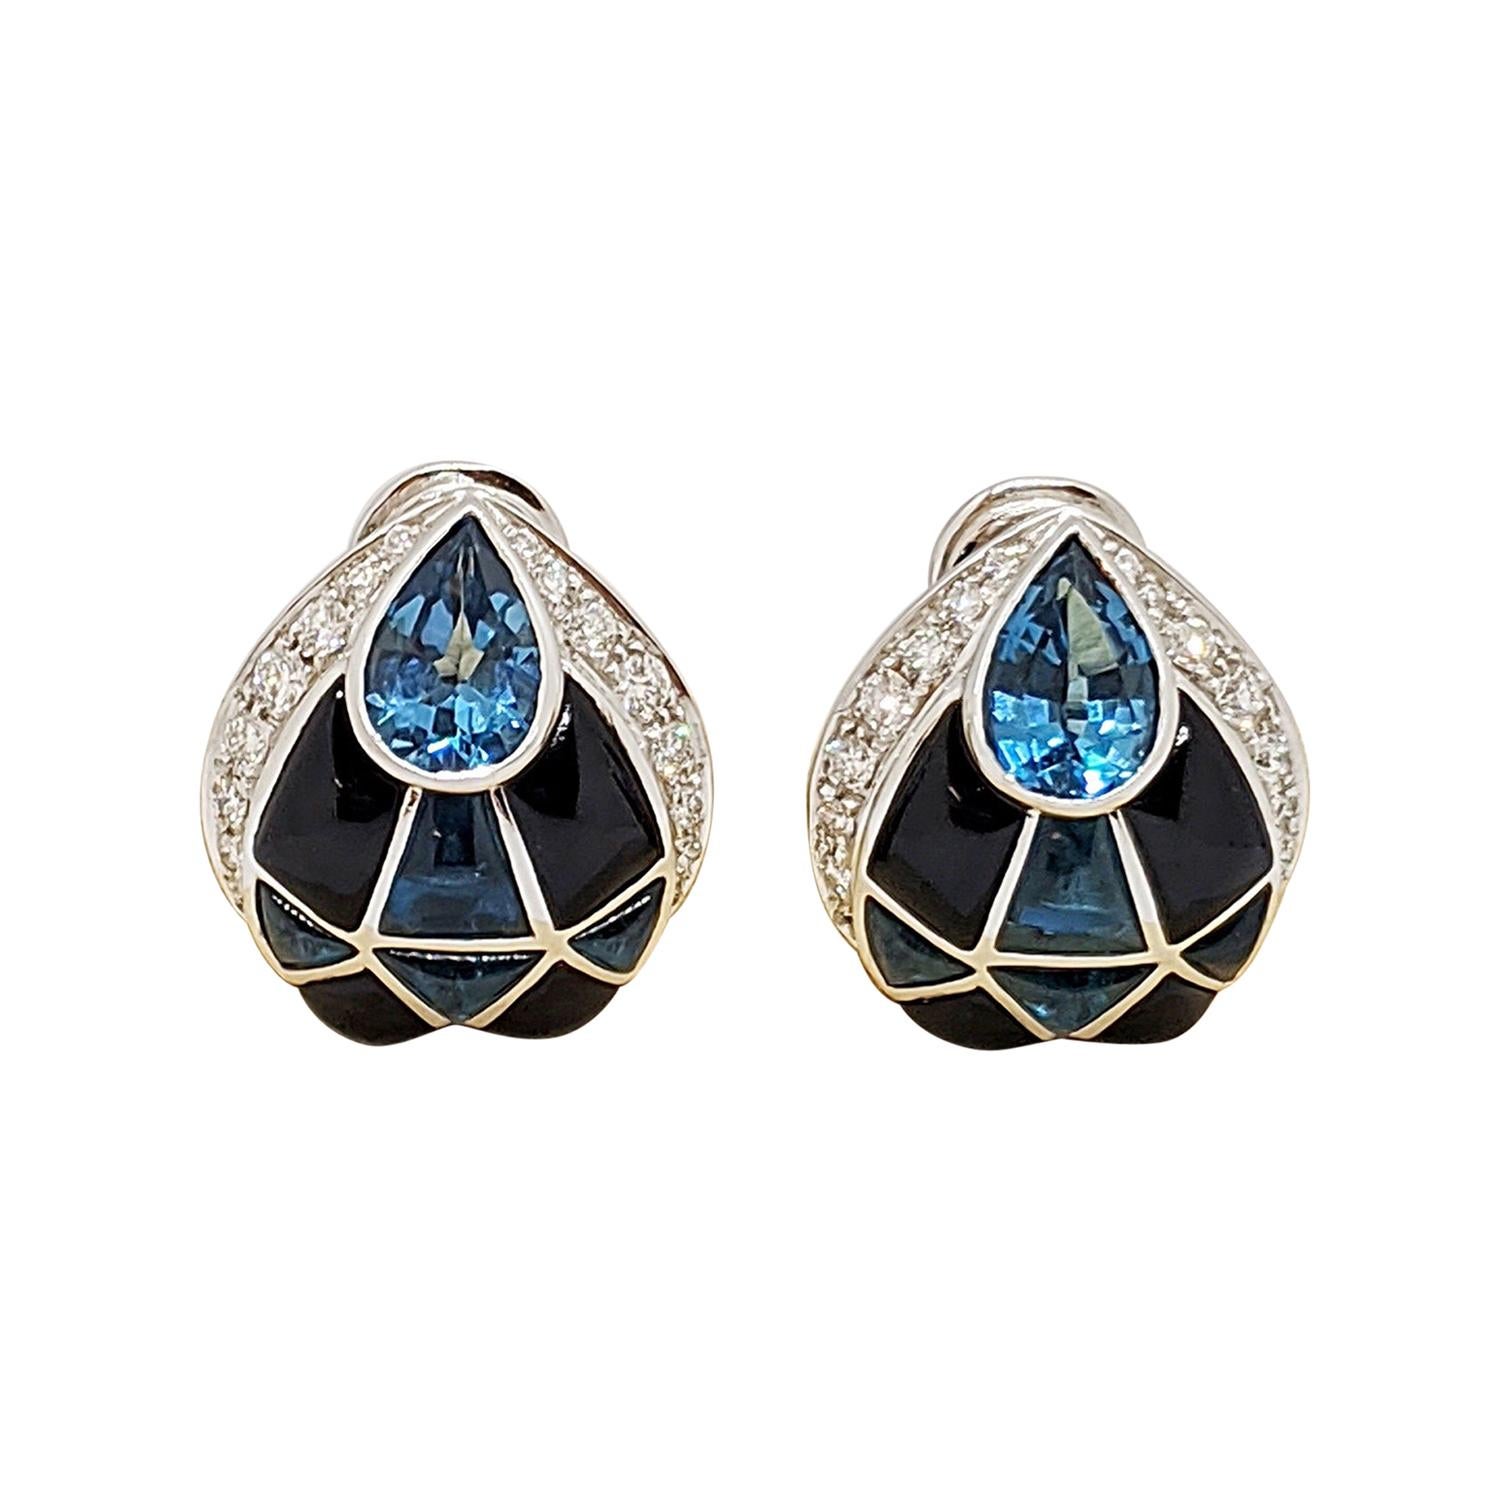 18 Karat White Gold Earrings with Diamonds, Blue Topaz & Onyx